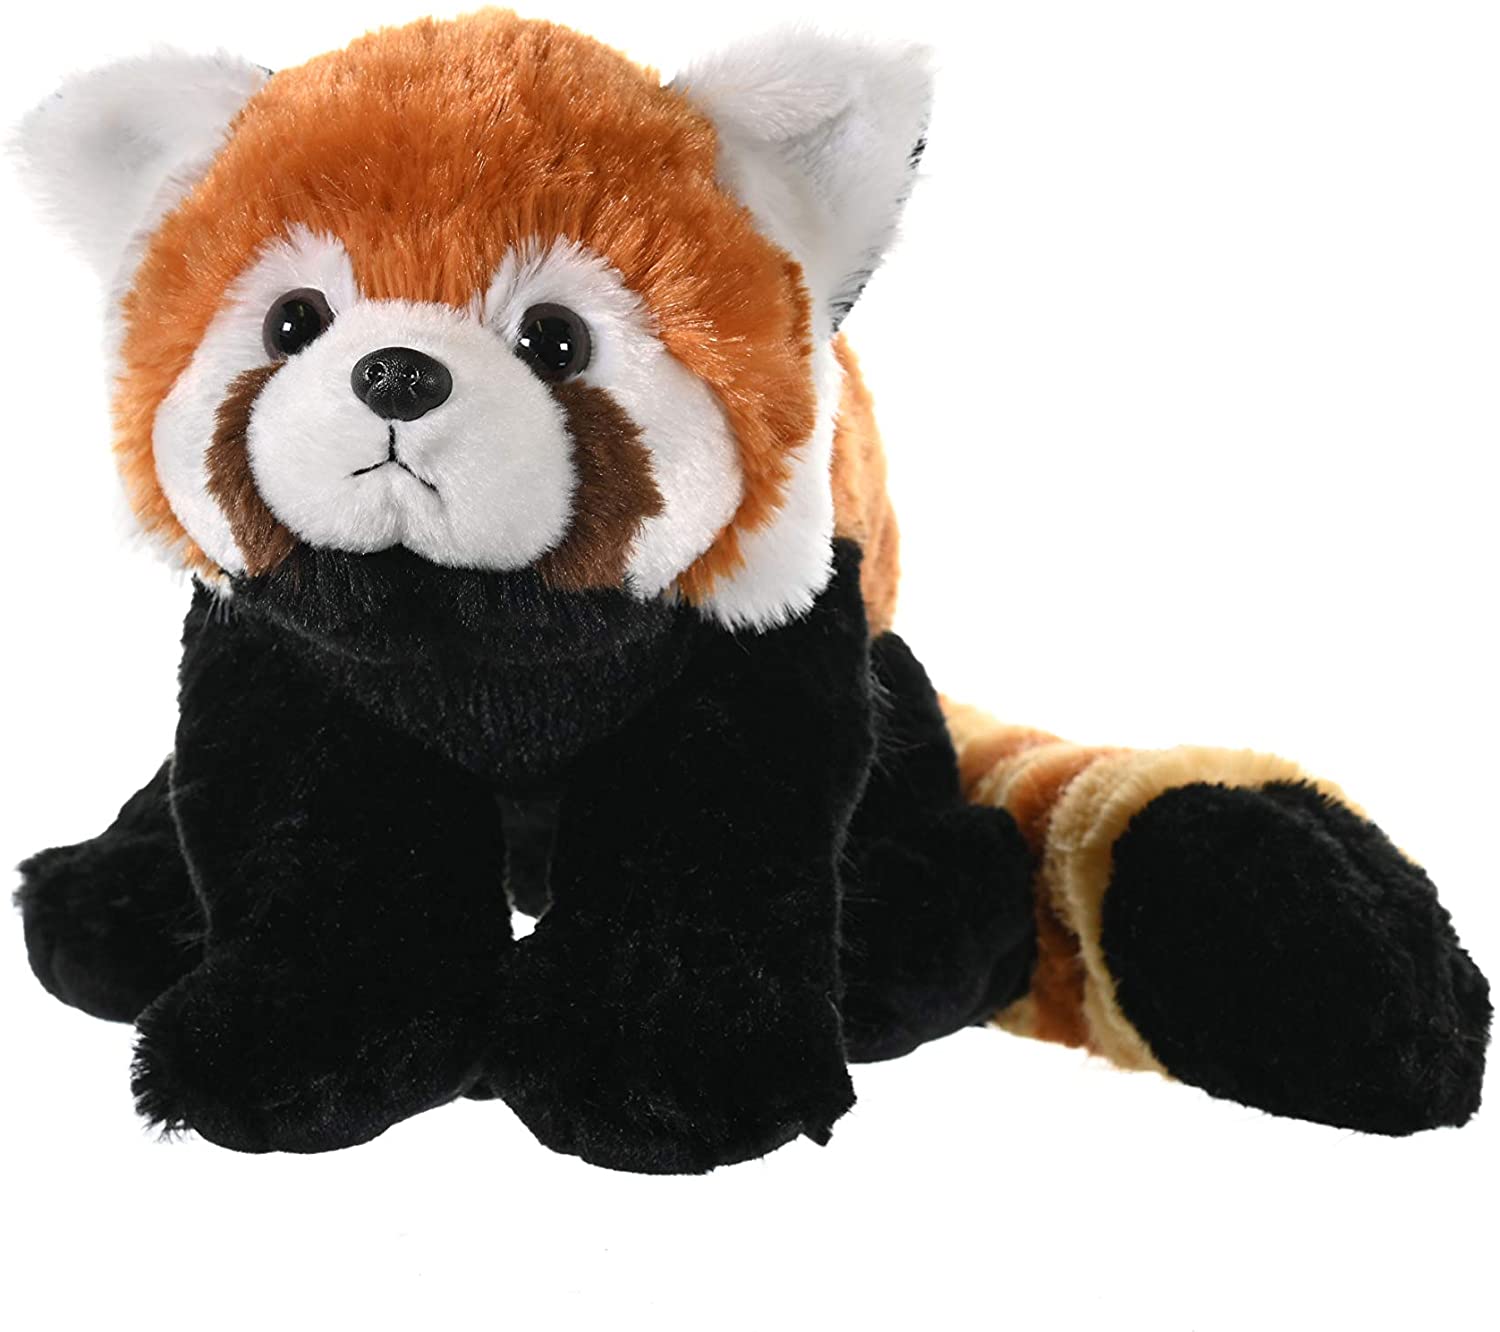 12" Wild Republic Cuddlekins Plush Stuffed Animal (Red Panda) $4.15 + Free Shipping w/ Prime or $25+